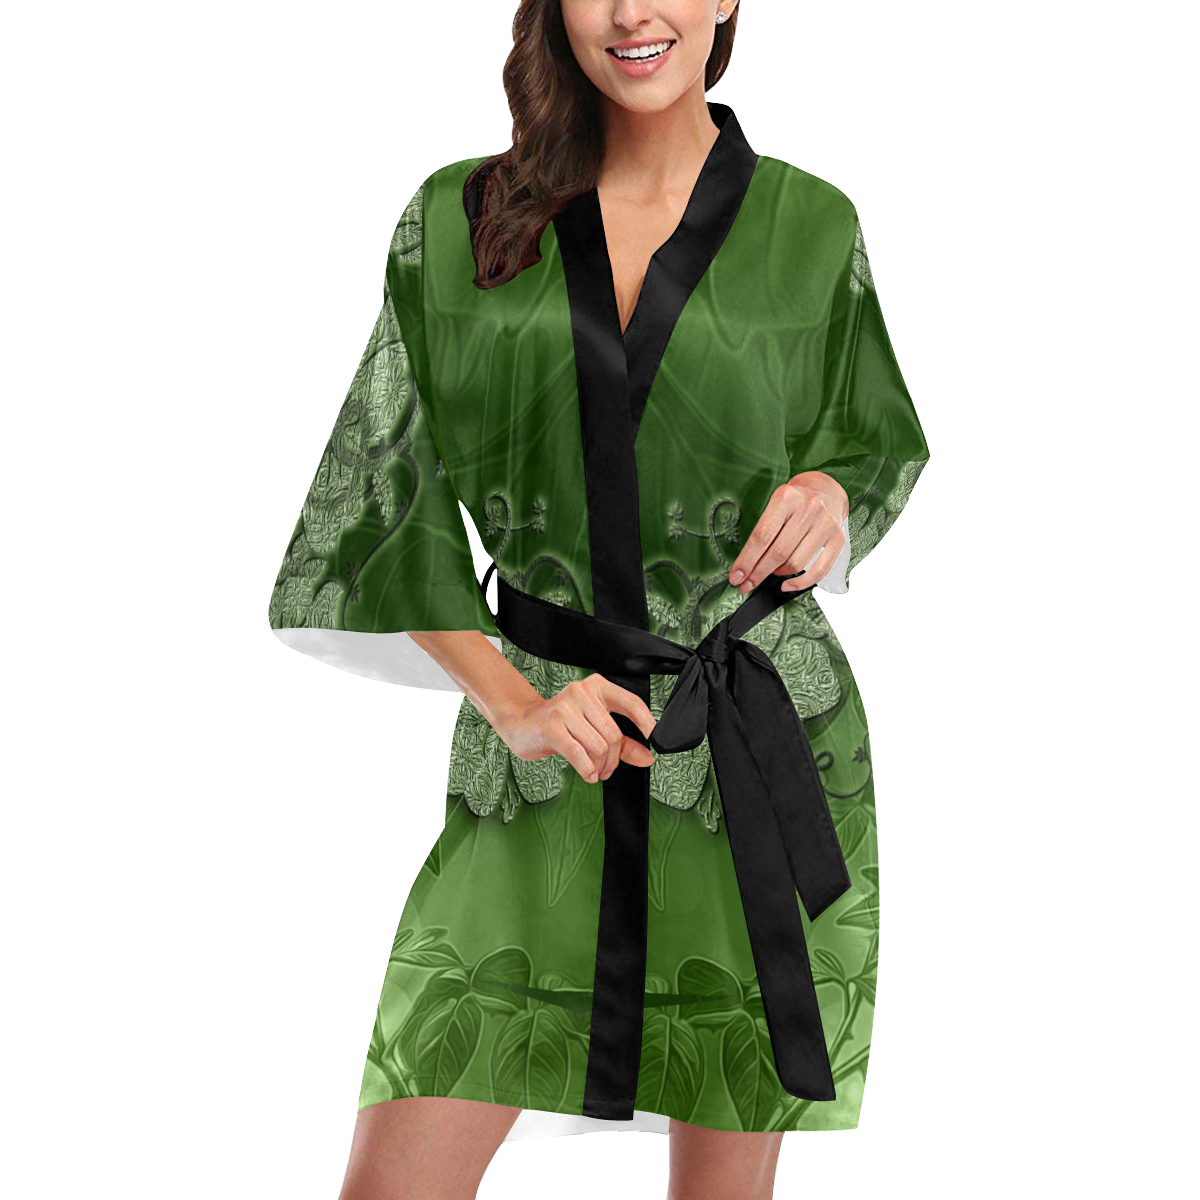 Wonderful green floral design Kimono Robe